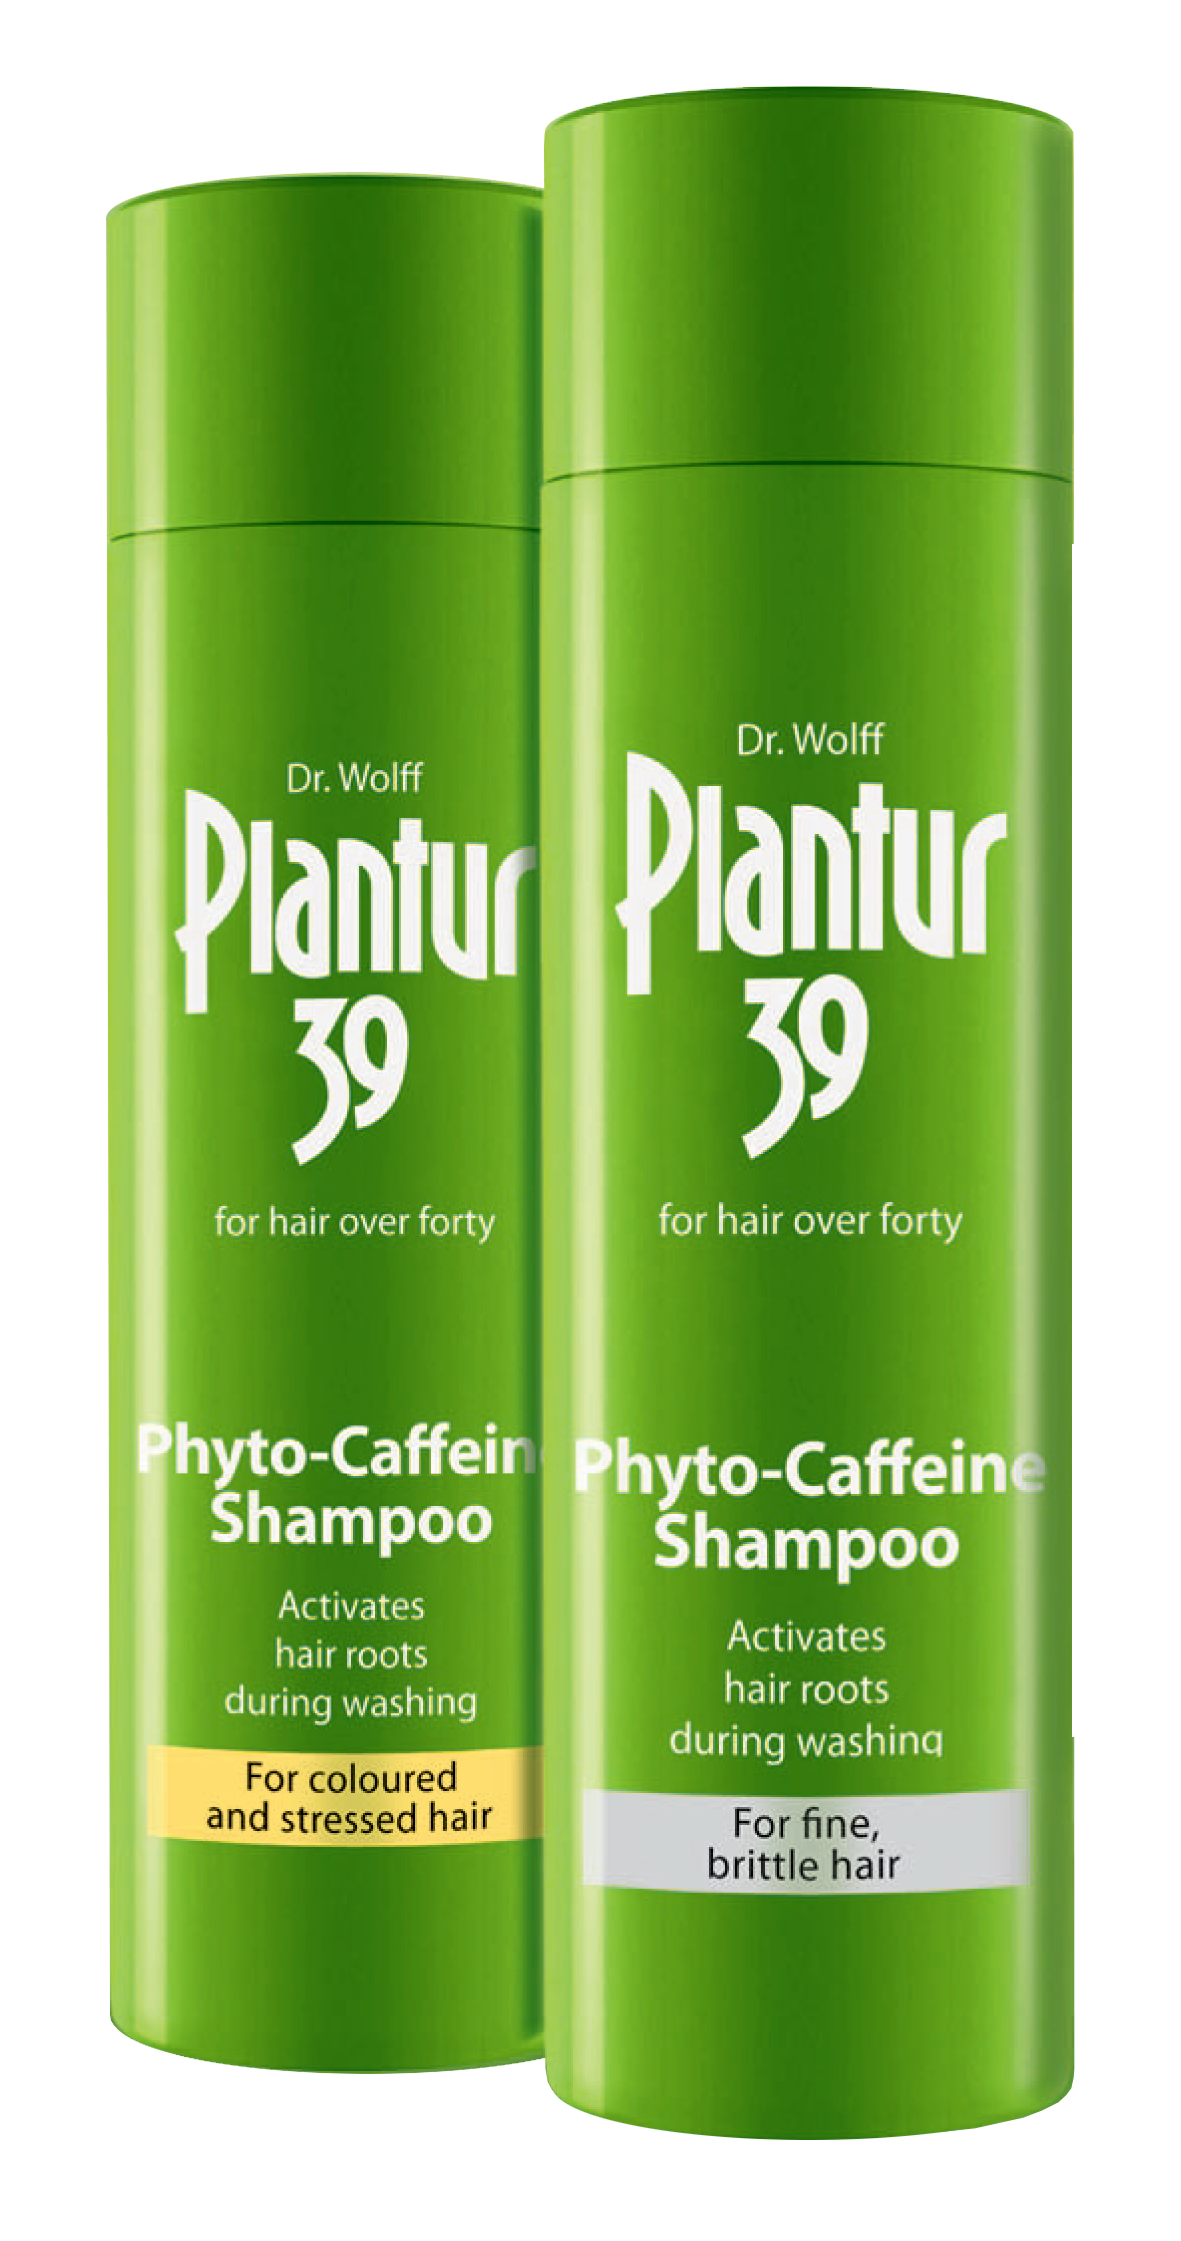 Caffeine shampoo helps stem hair loss in women  research ...